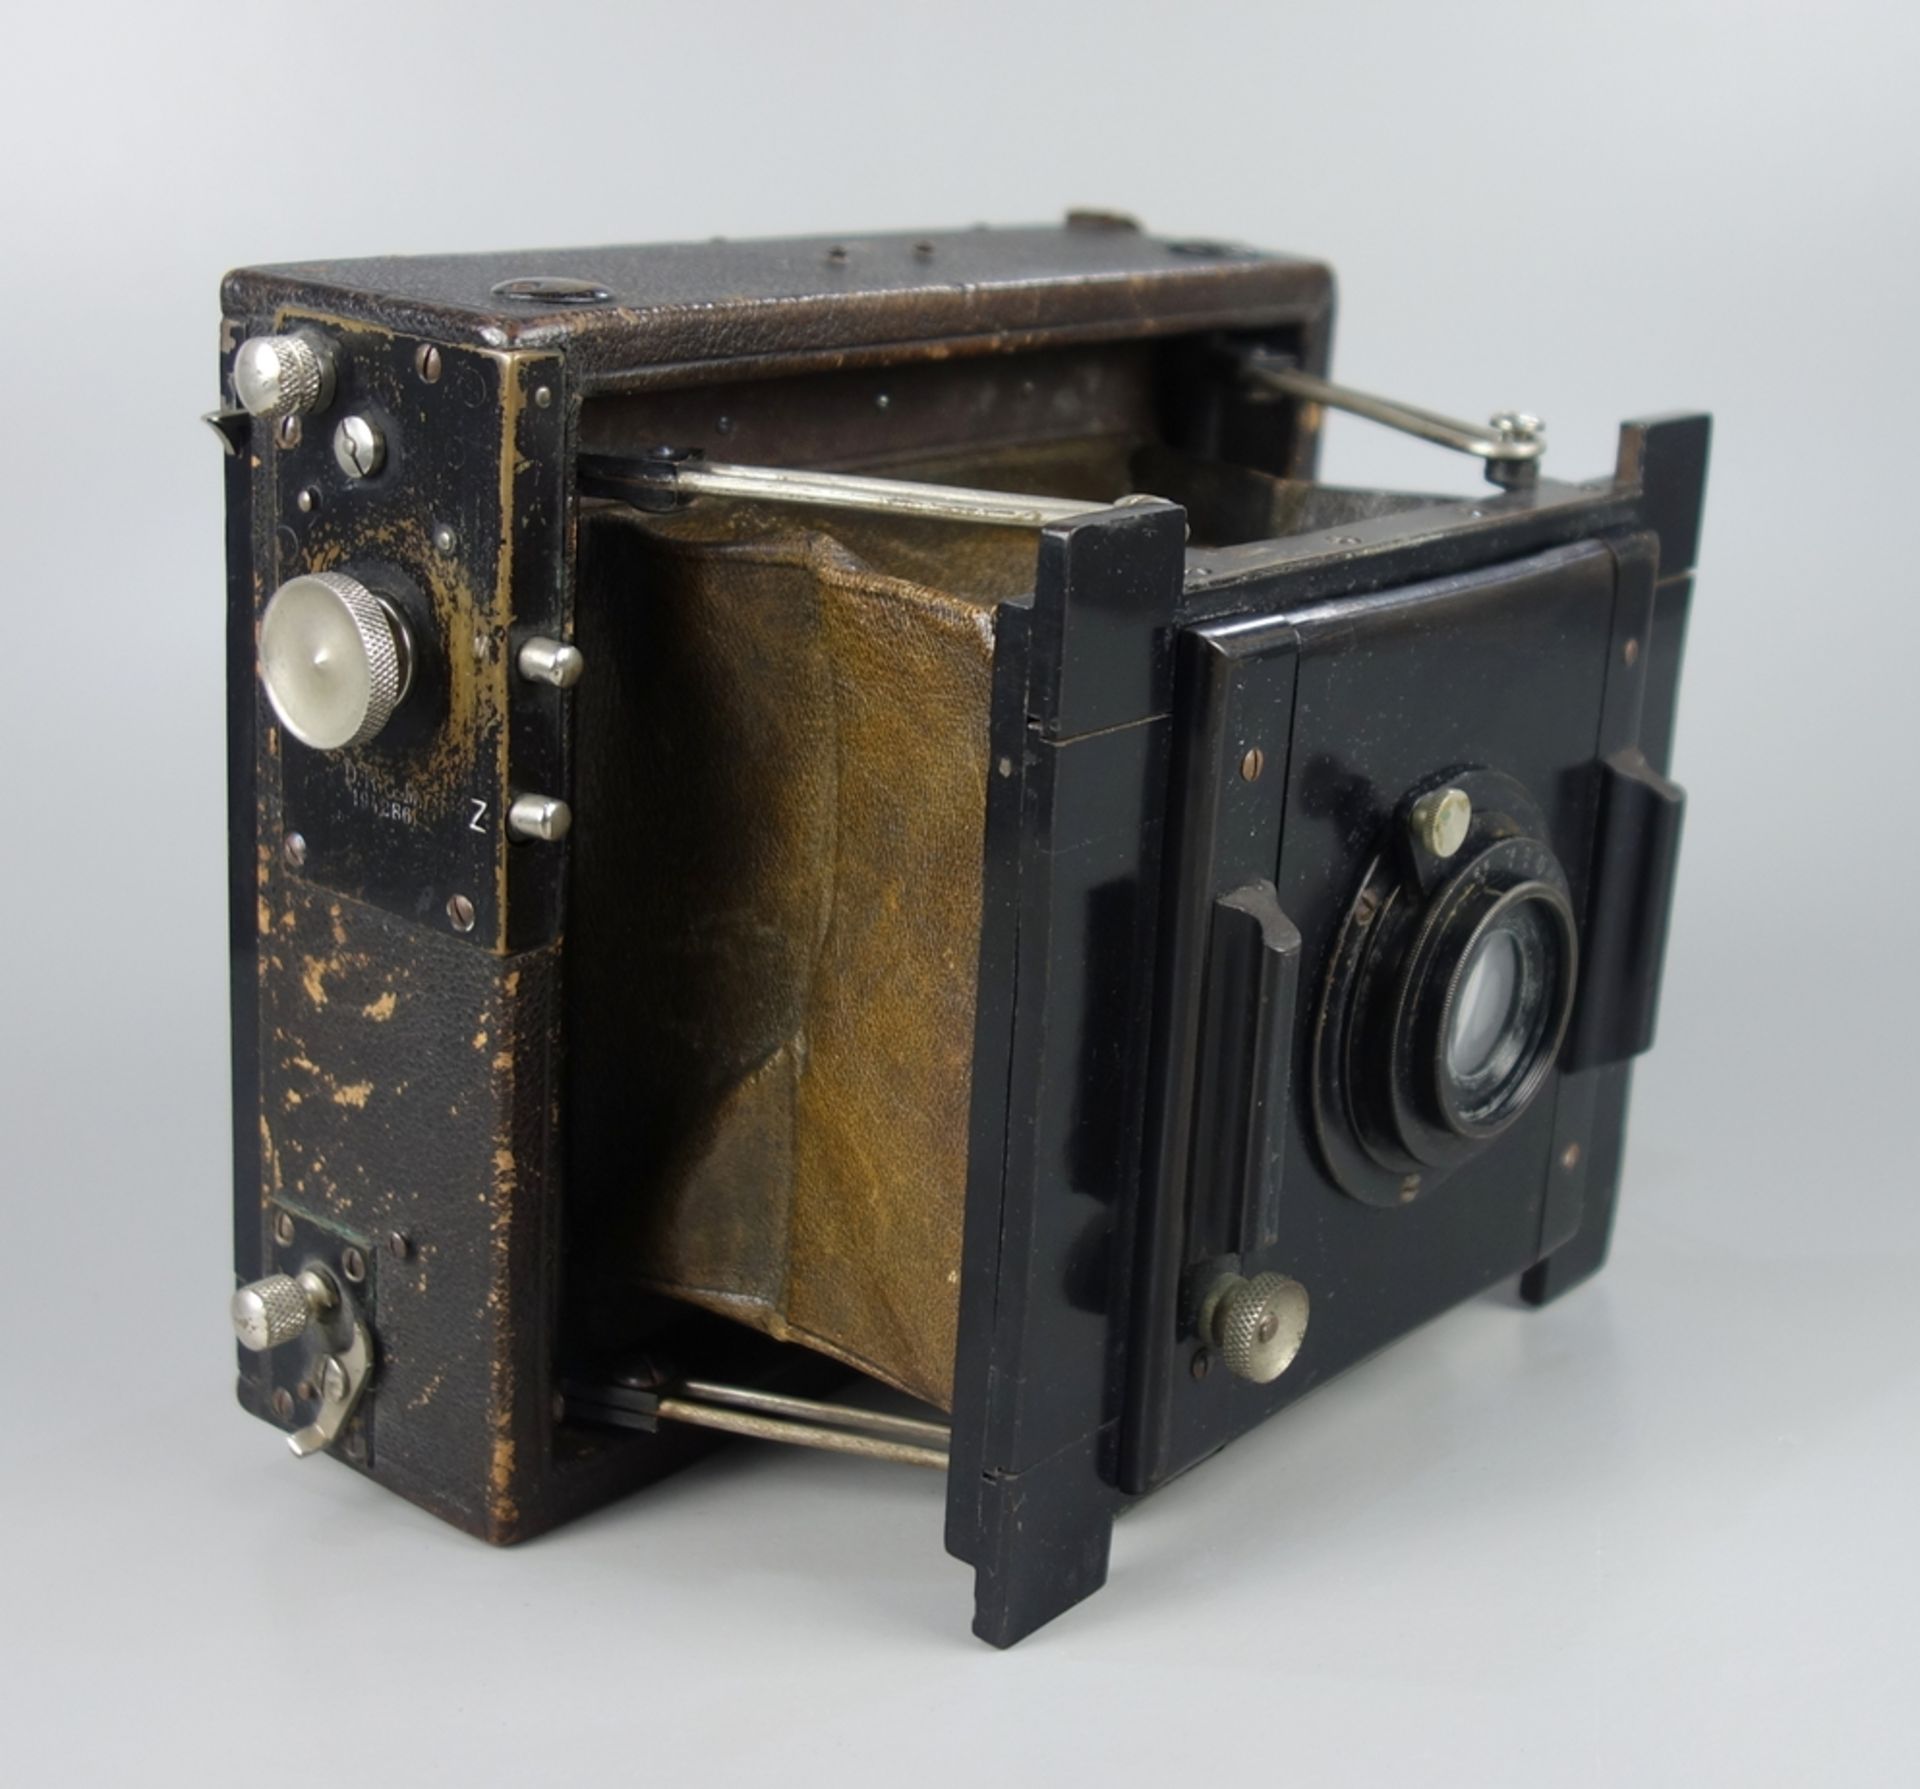 Leather metal folding camera, c. 1905